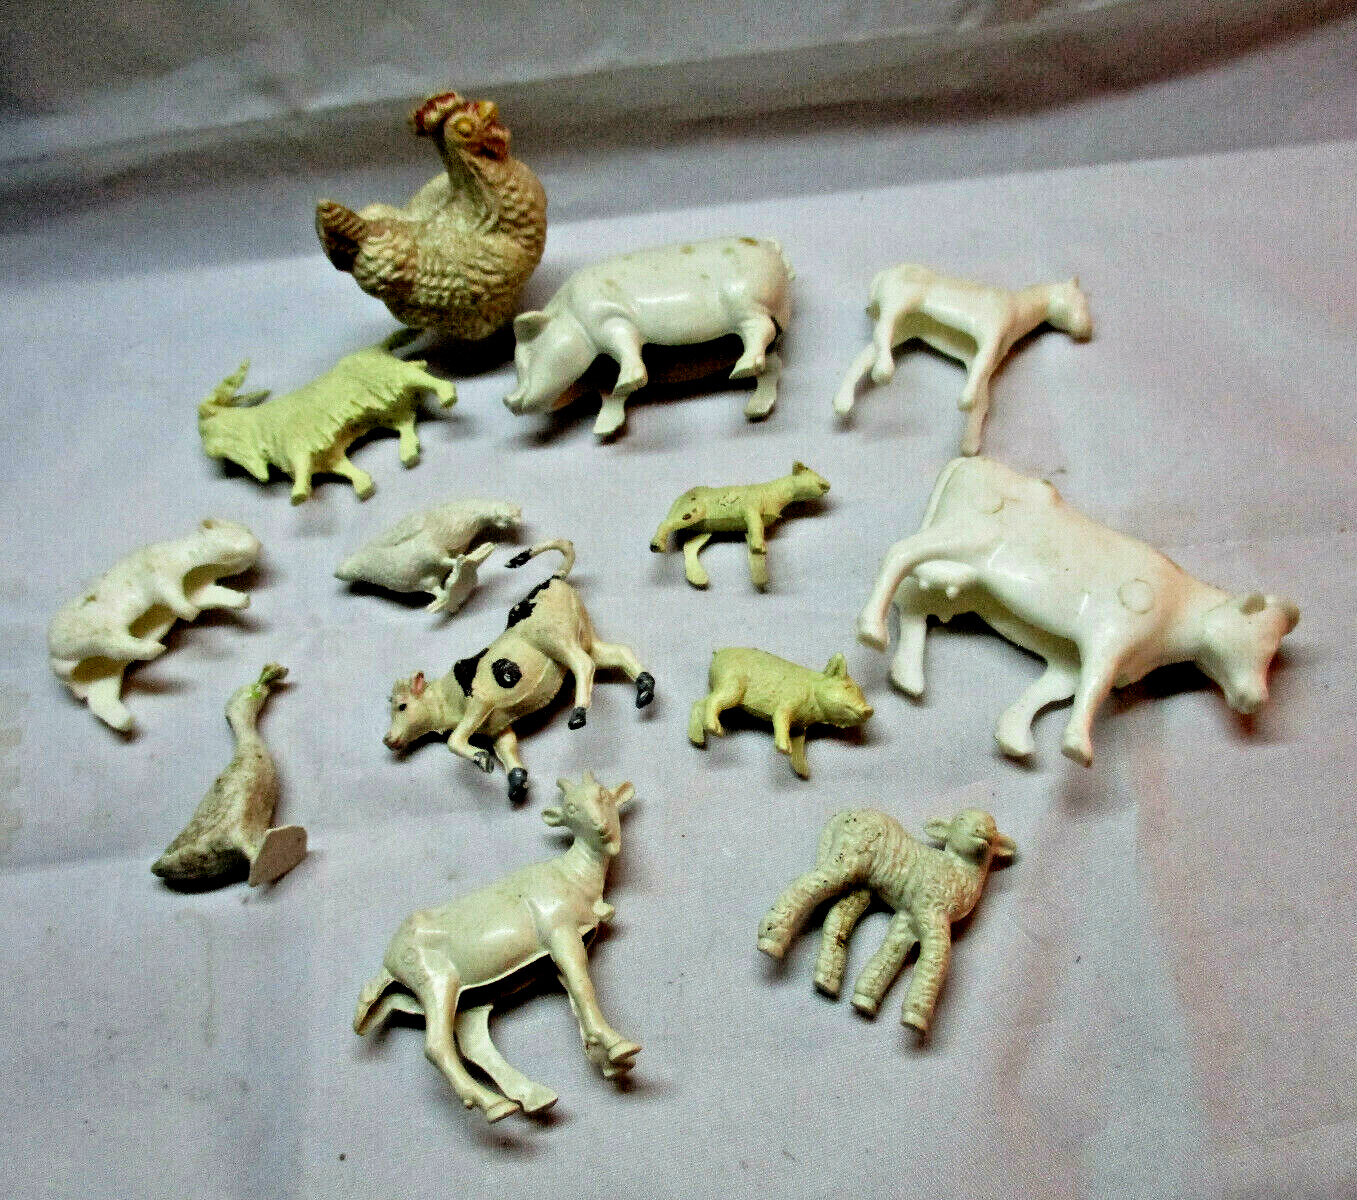 Farm Lot of Rubber Plastic Milk Cows Pigs Horse Sheep Chickens Farm Animal (13)